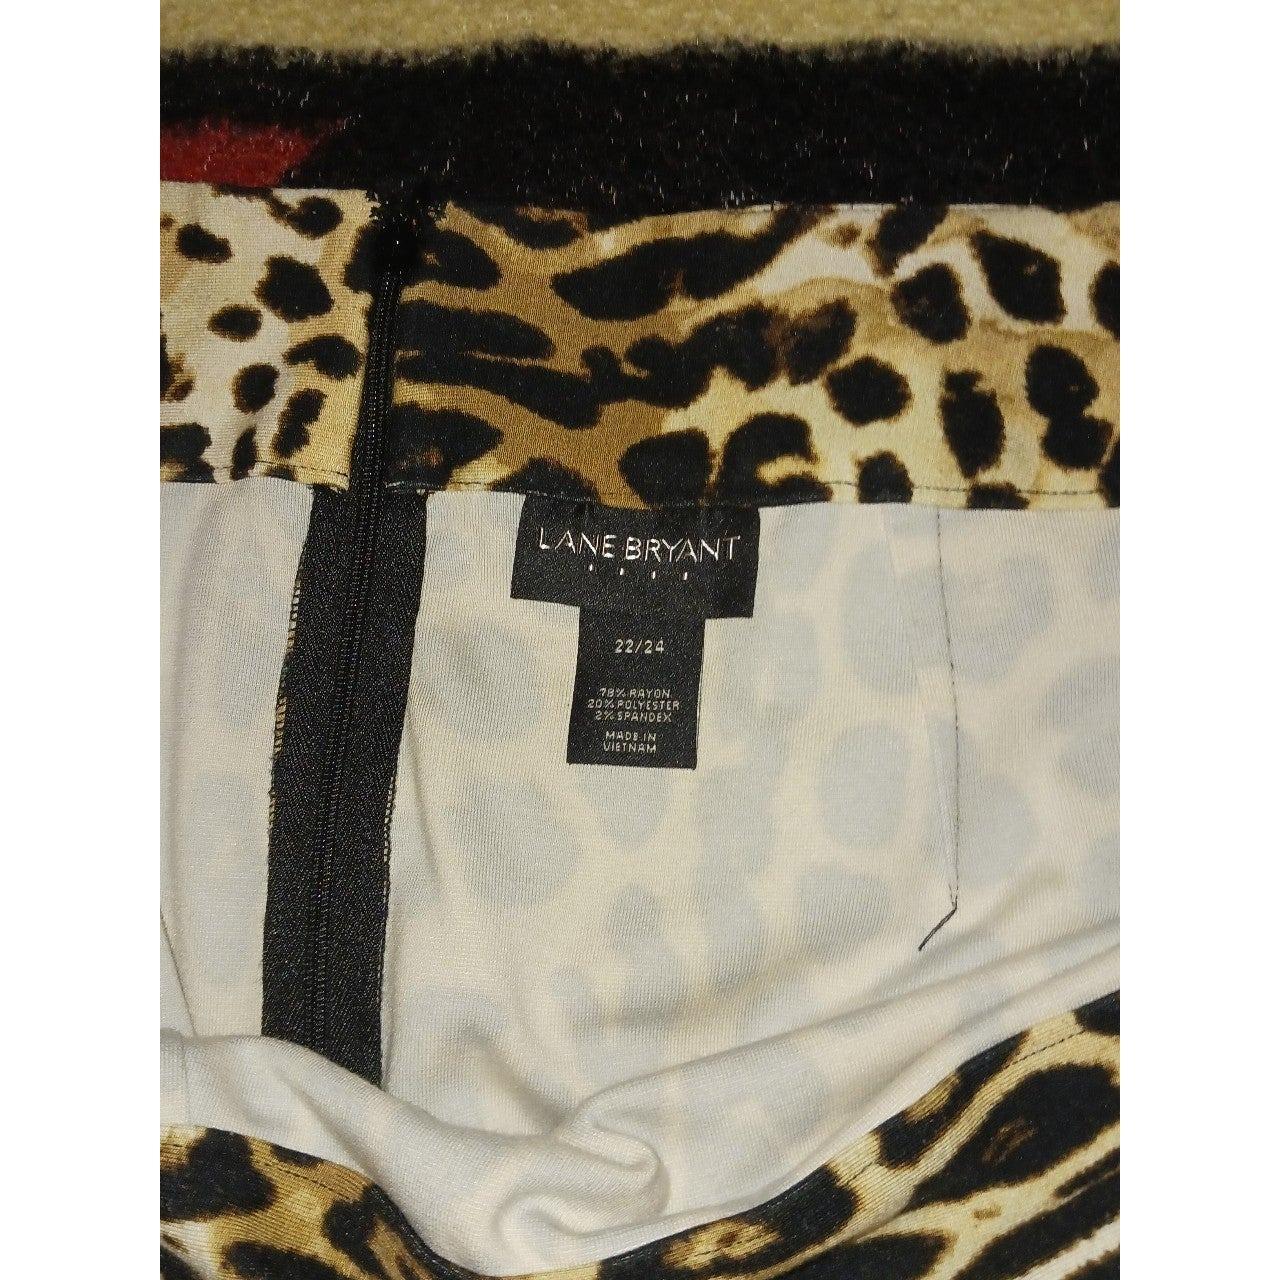 Lane Bryant 22/24 leopard print mini skirt slit zip... - Depop